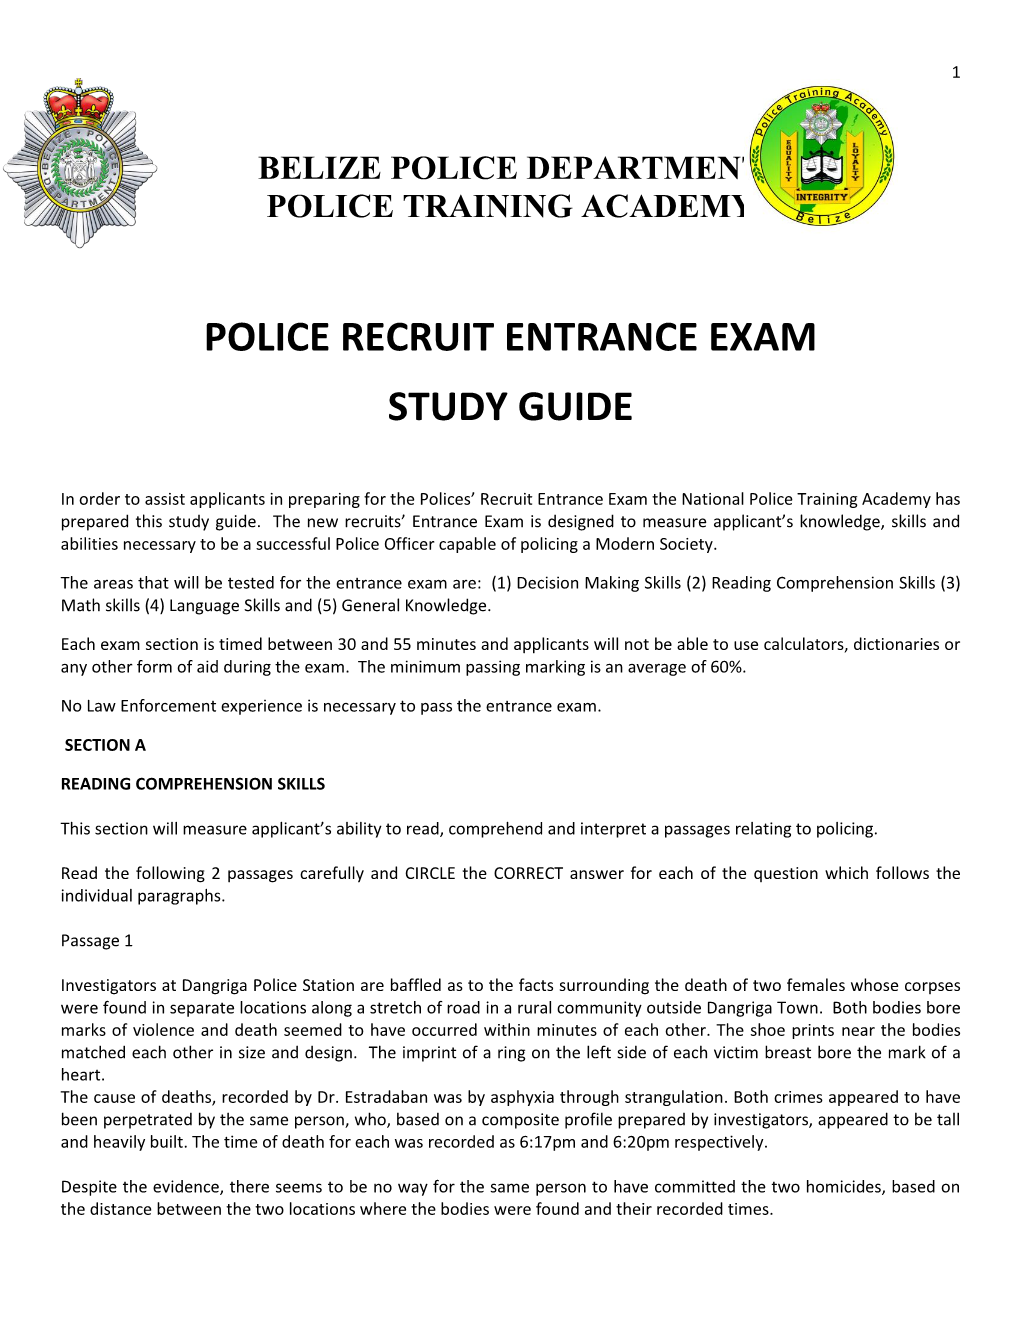 Police Recruit Entrance Exam Study Guide